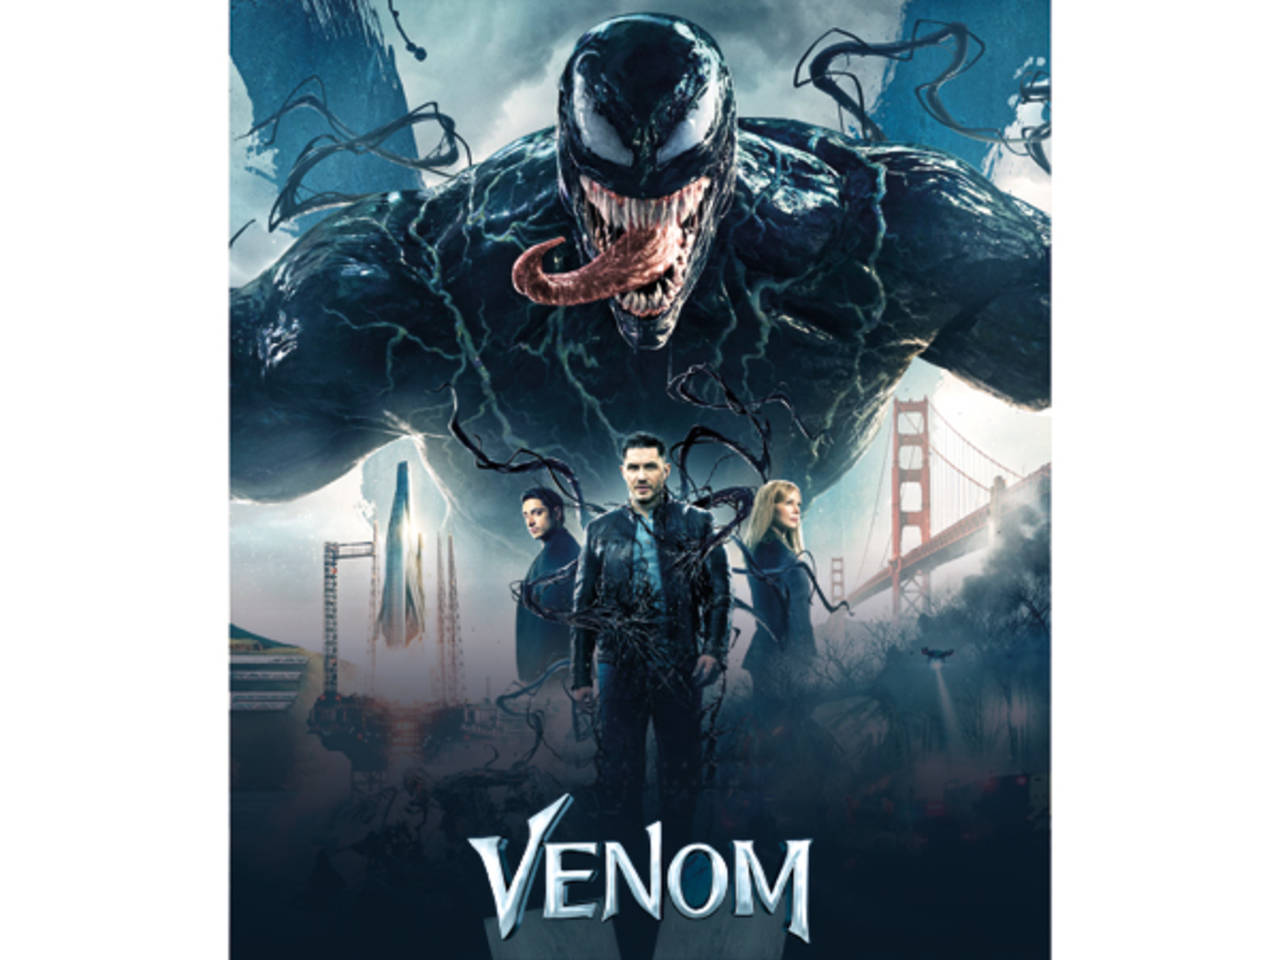 Is 'Venom' the darkest Marvel movie ever? - Times of India